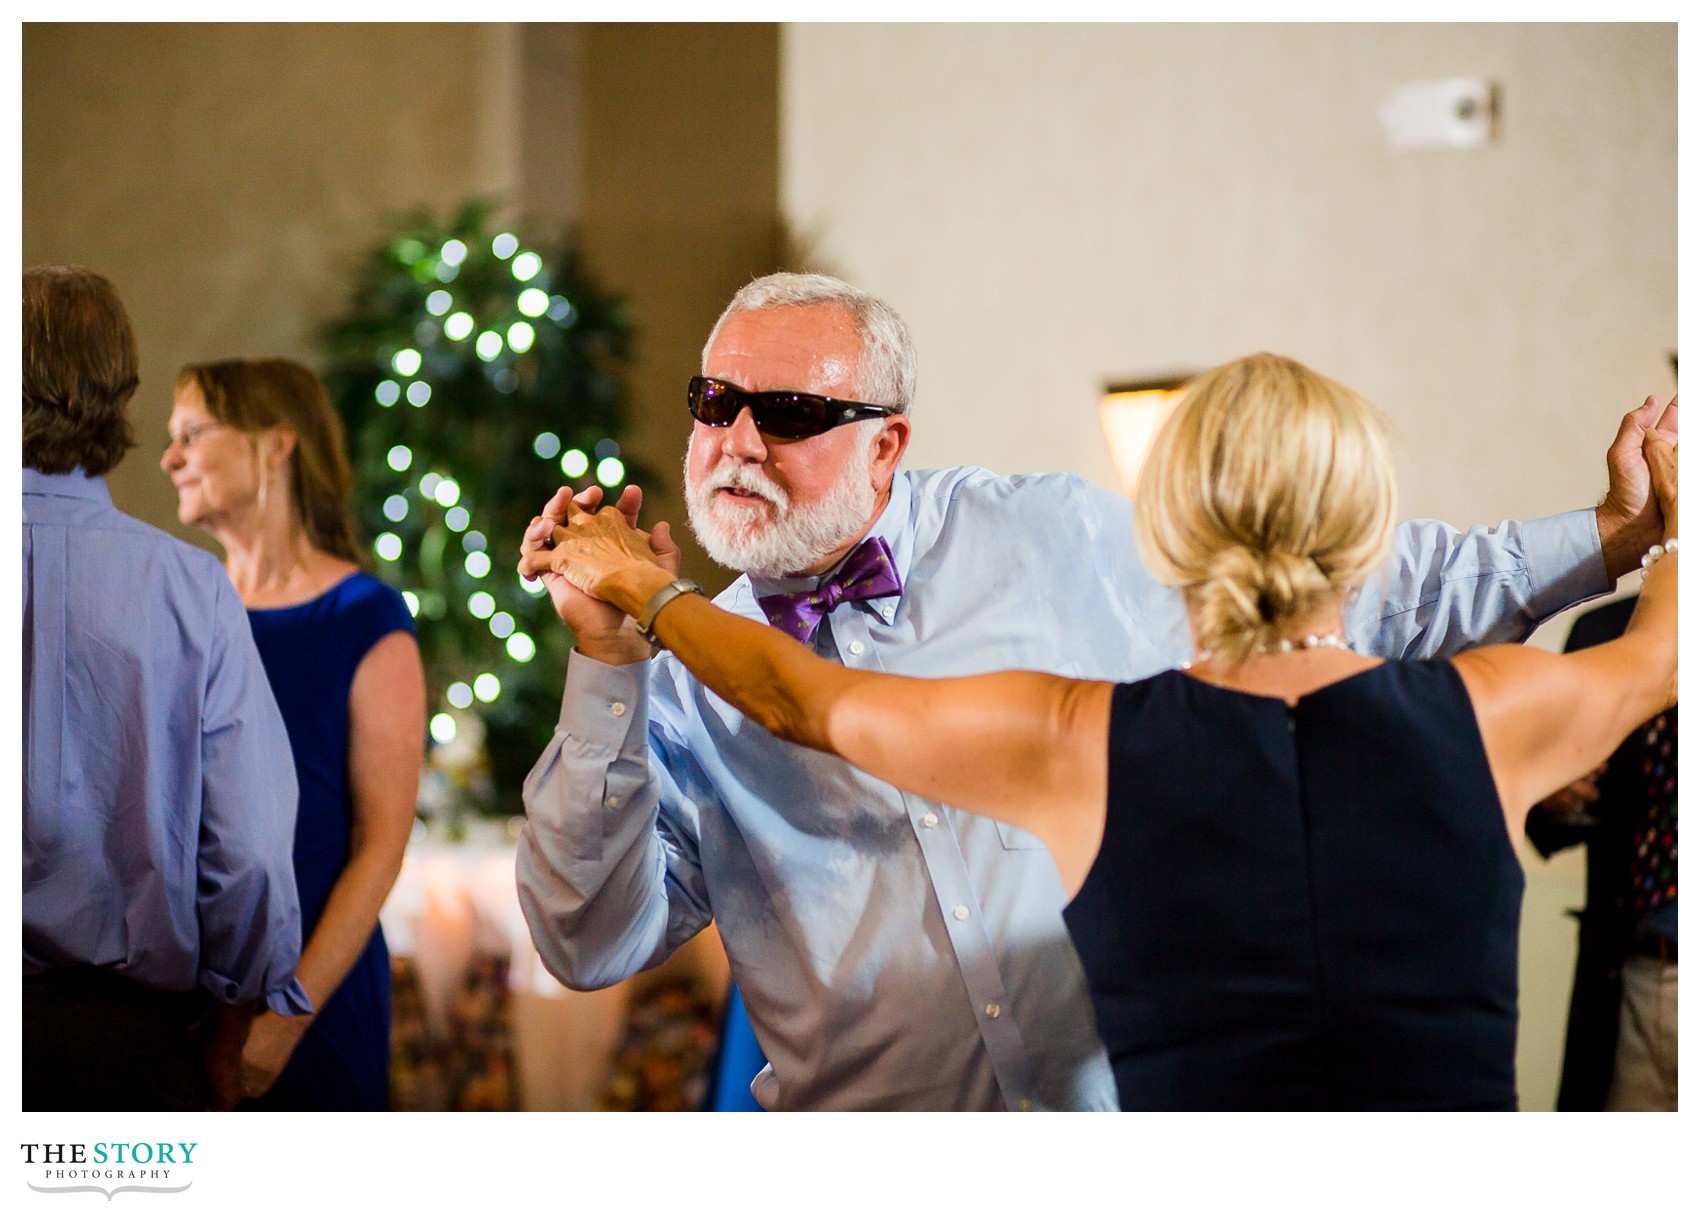 dancing at wedding reception in Clayton, NY